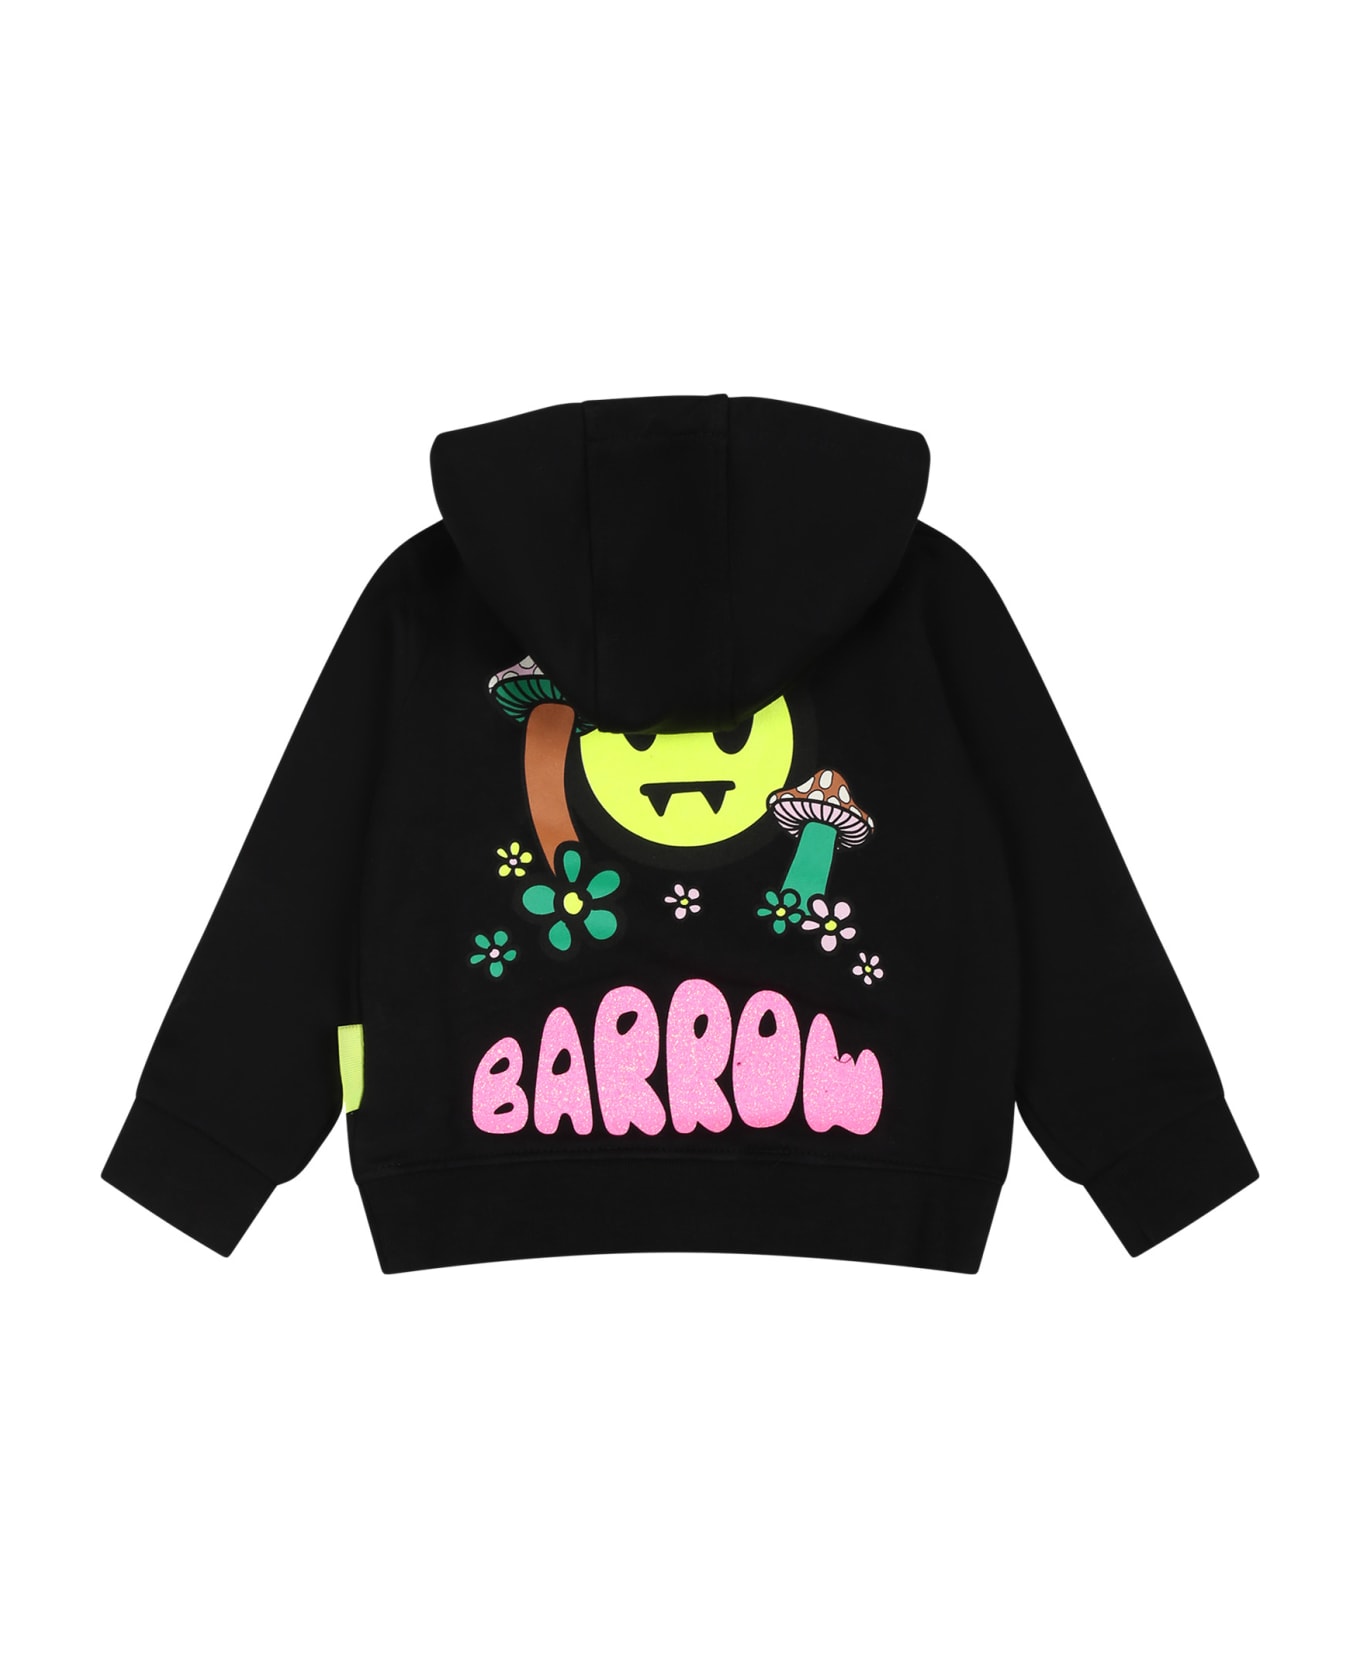 Barrow Black Sweatshirt For Baby Girl With Logo And Print - Black